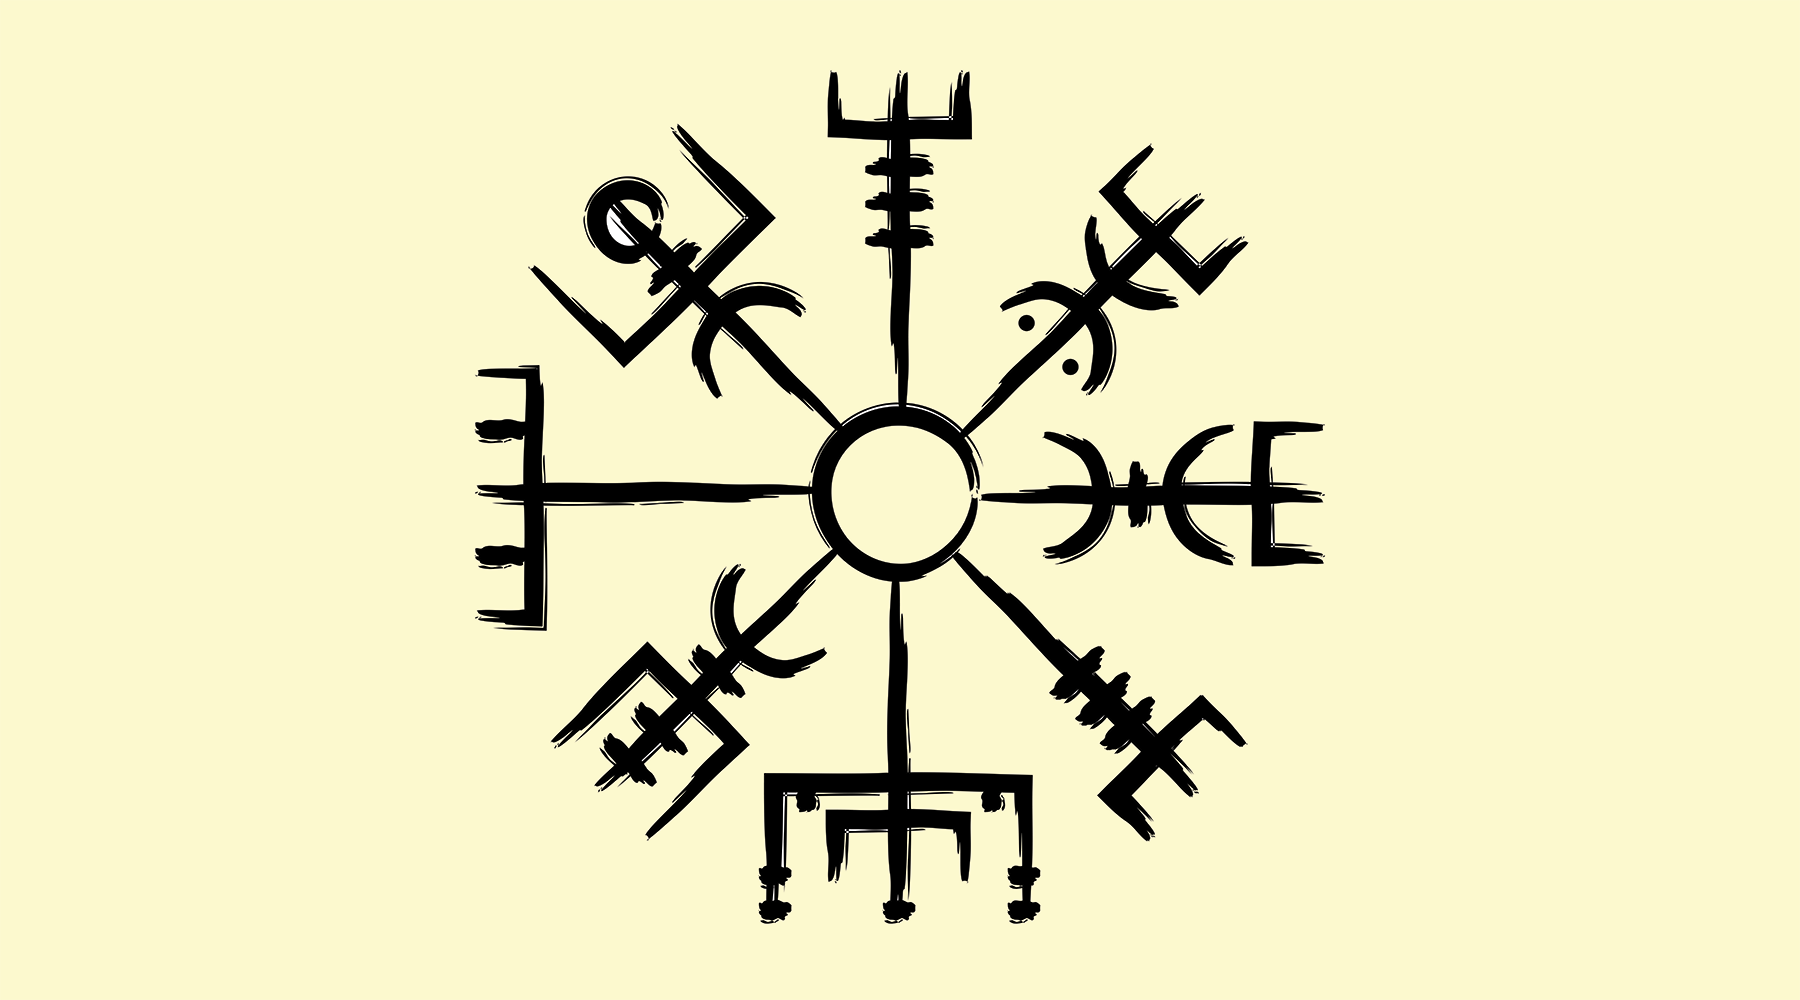 The Viking compass symbol